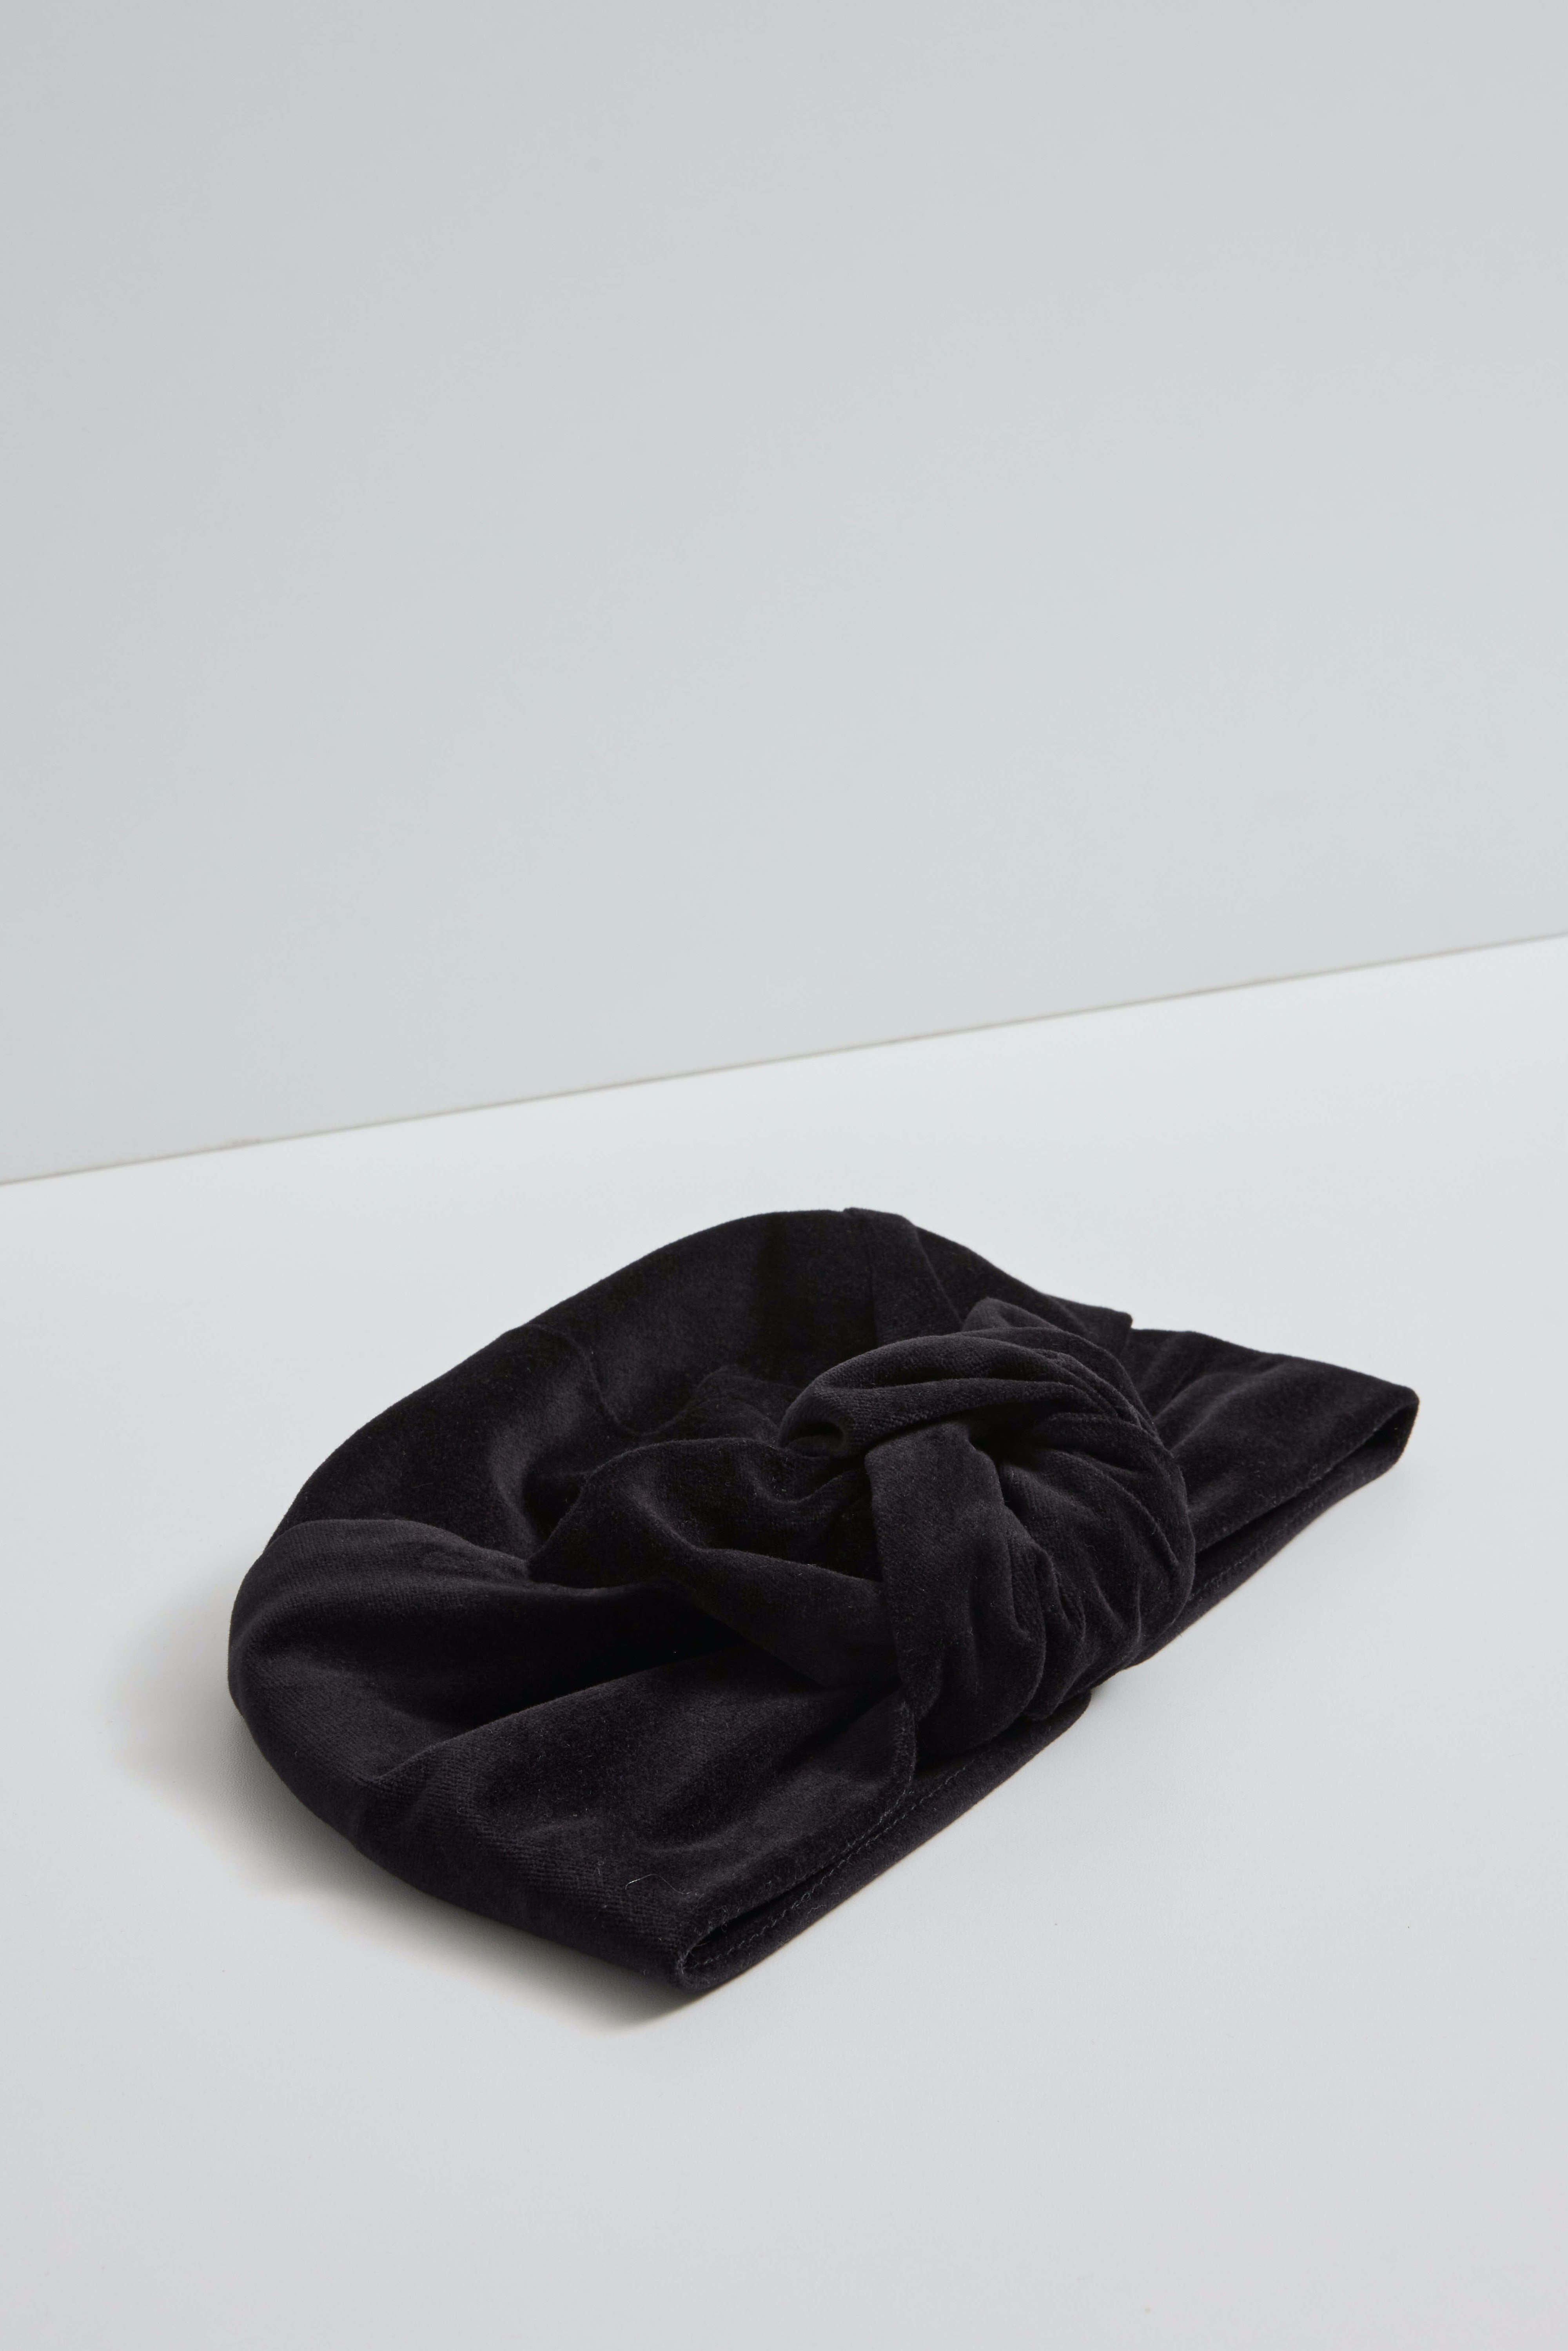 Parelli knotted turban hat - Black velvet